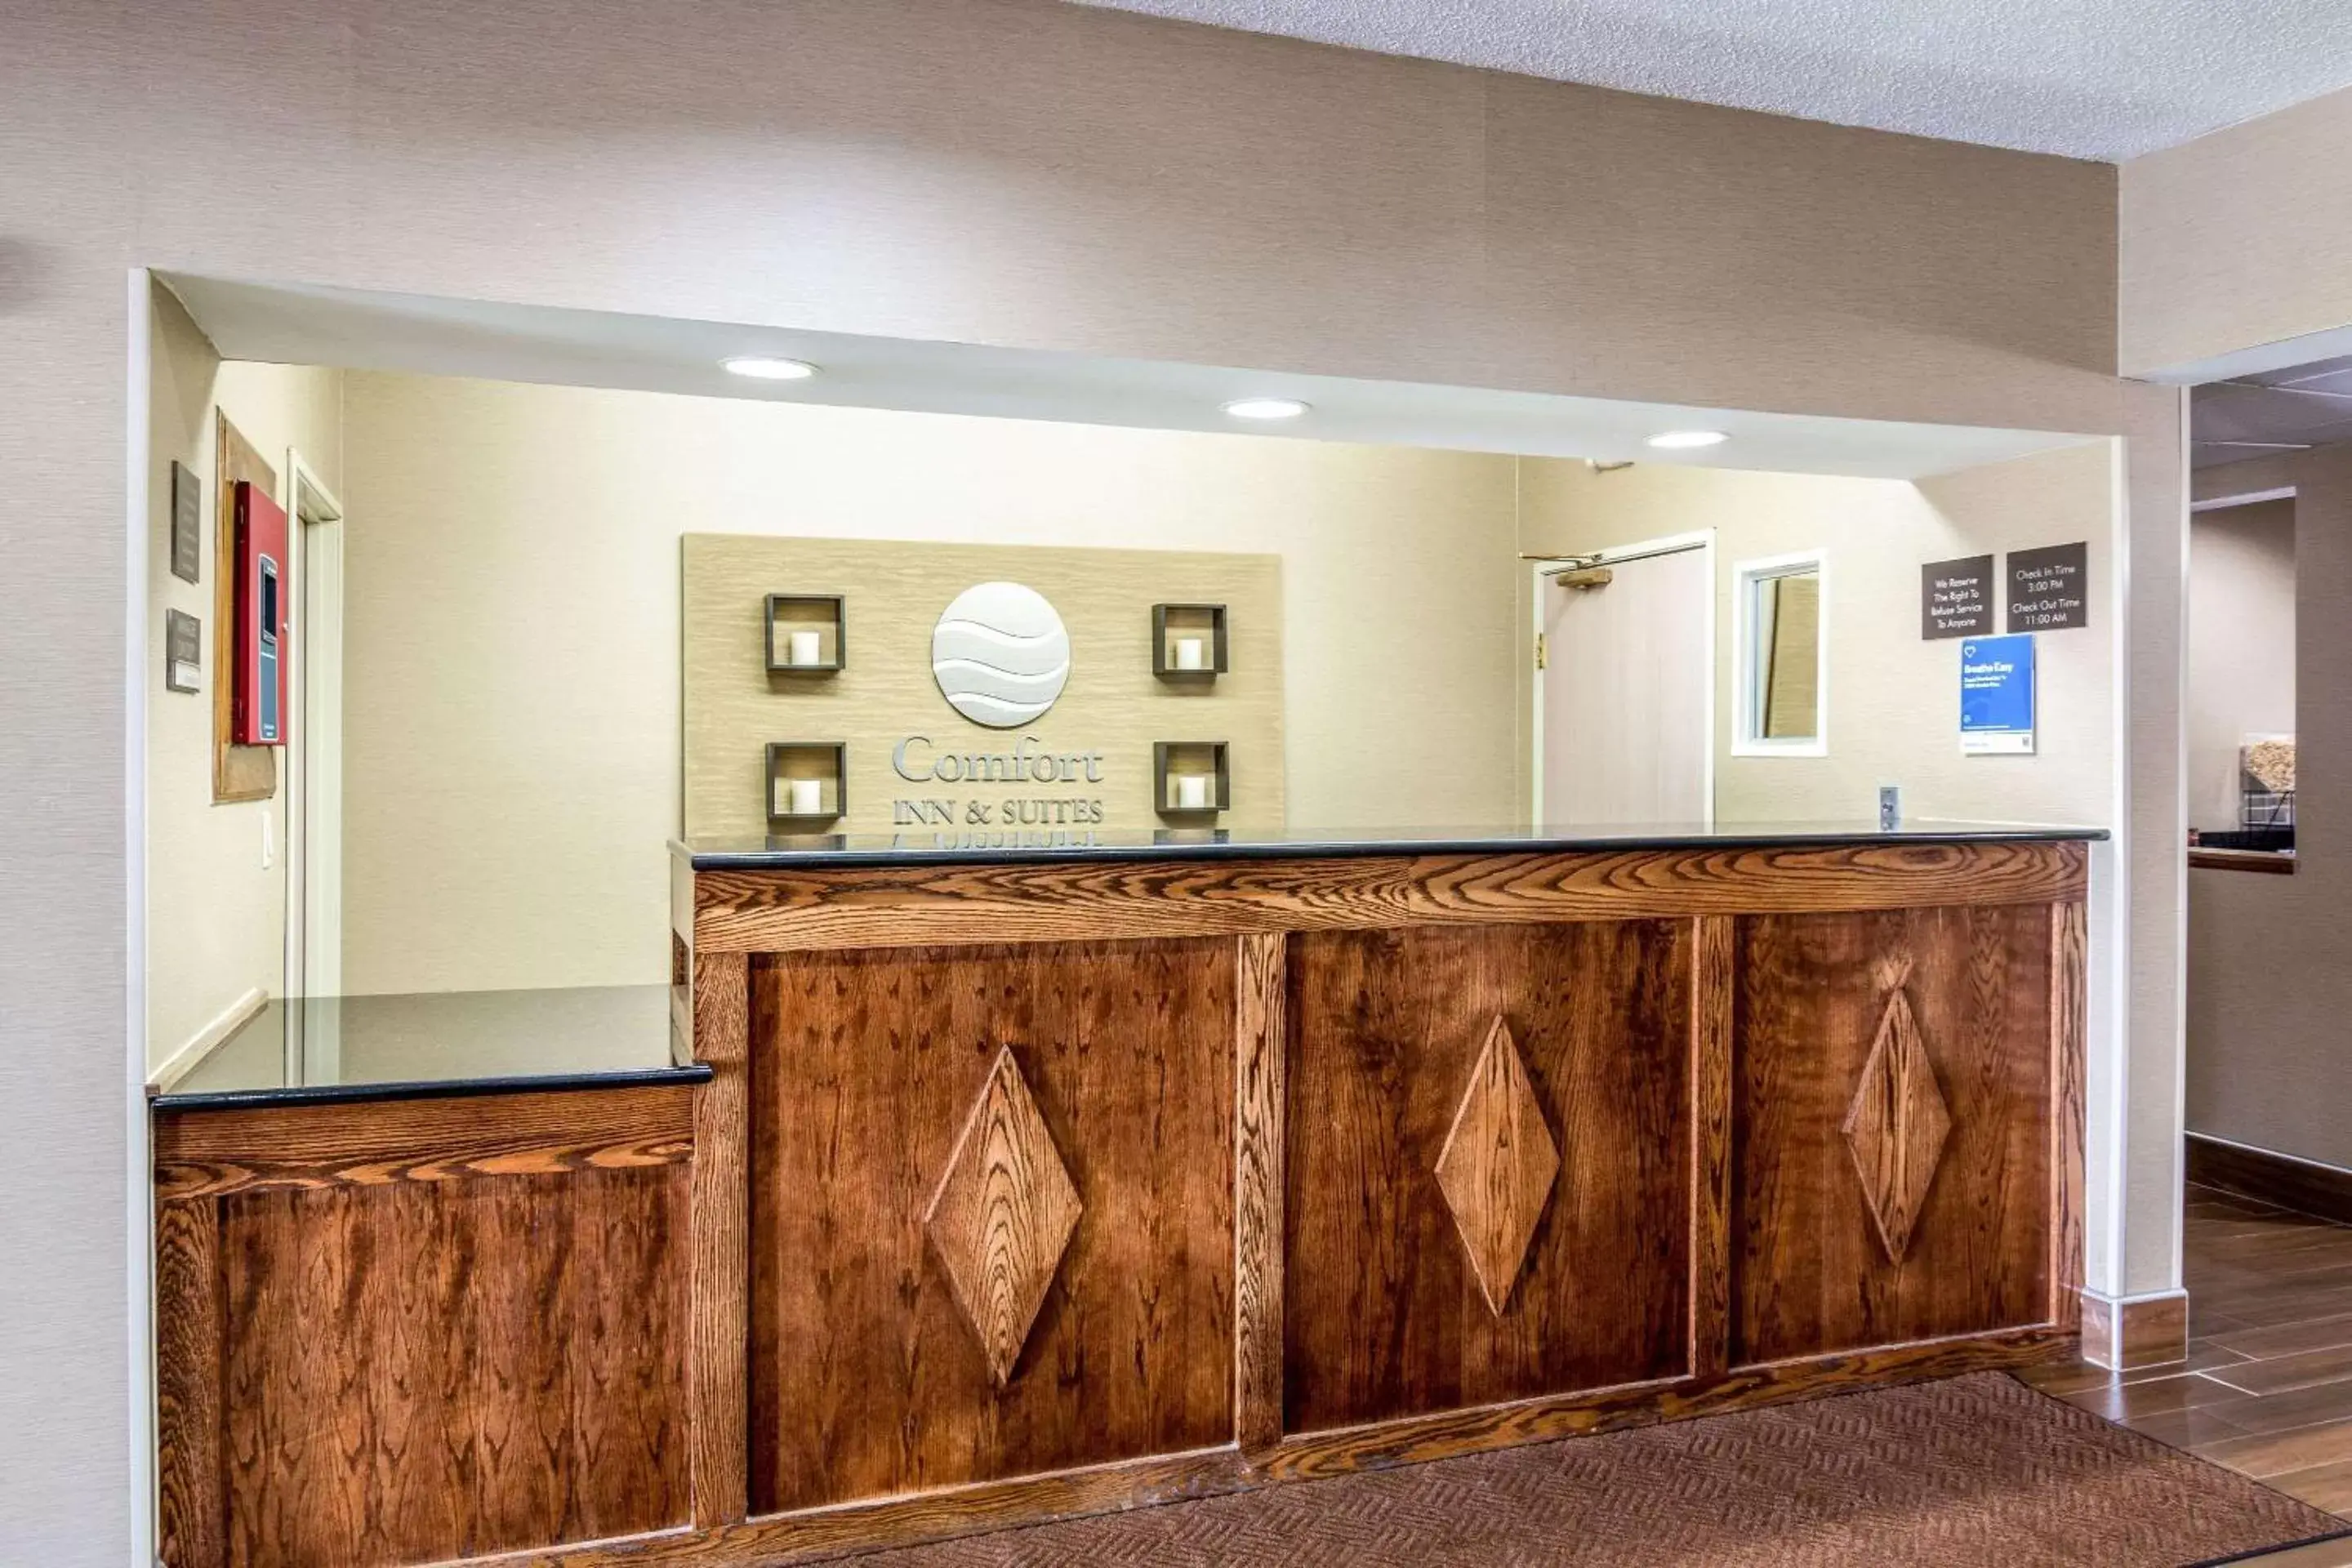 Lobby or reception, Lobby/Reception in Comfort Inn & Suites - Hannibal